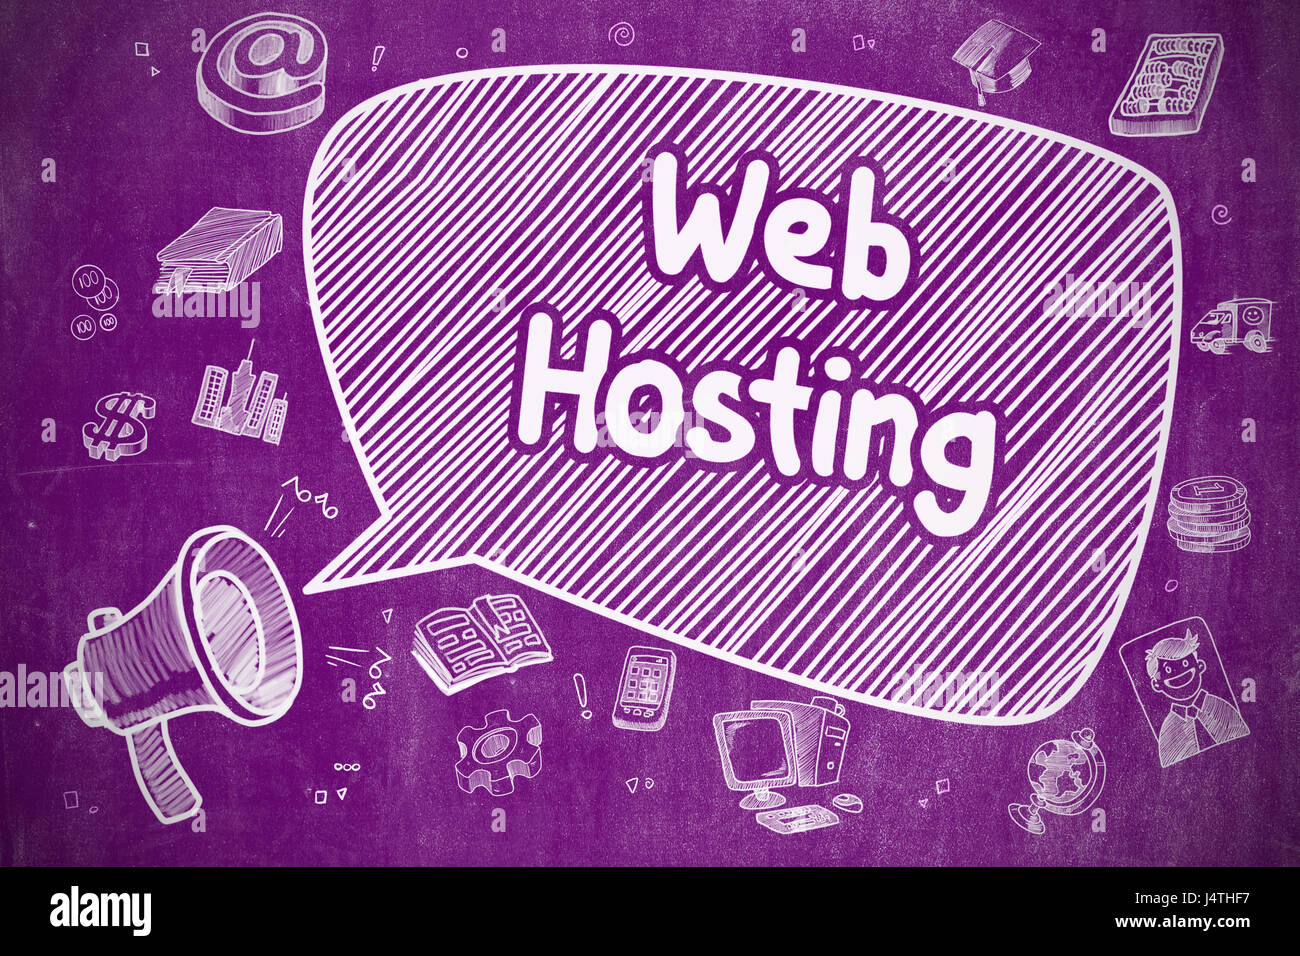 Web Hosting - Hand Drawn Illustration on Purple Chalkboard. Stock Photo